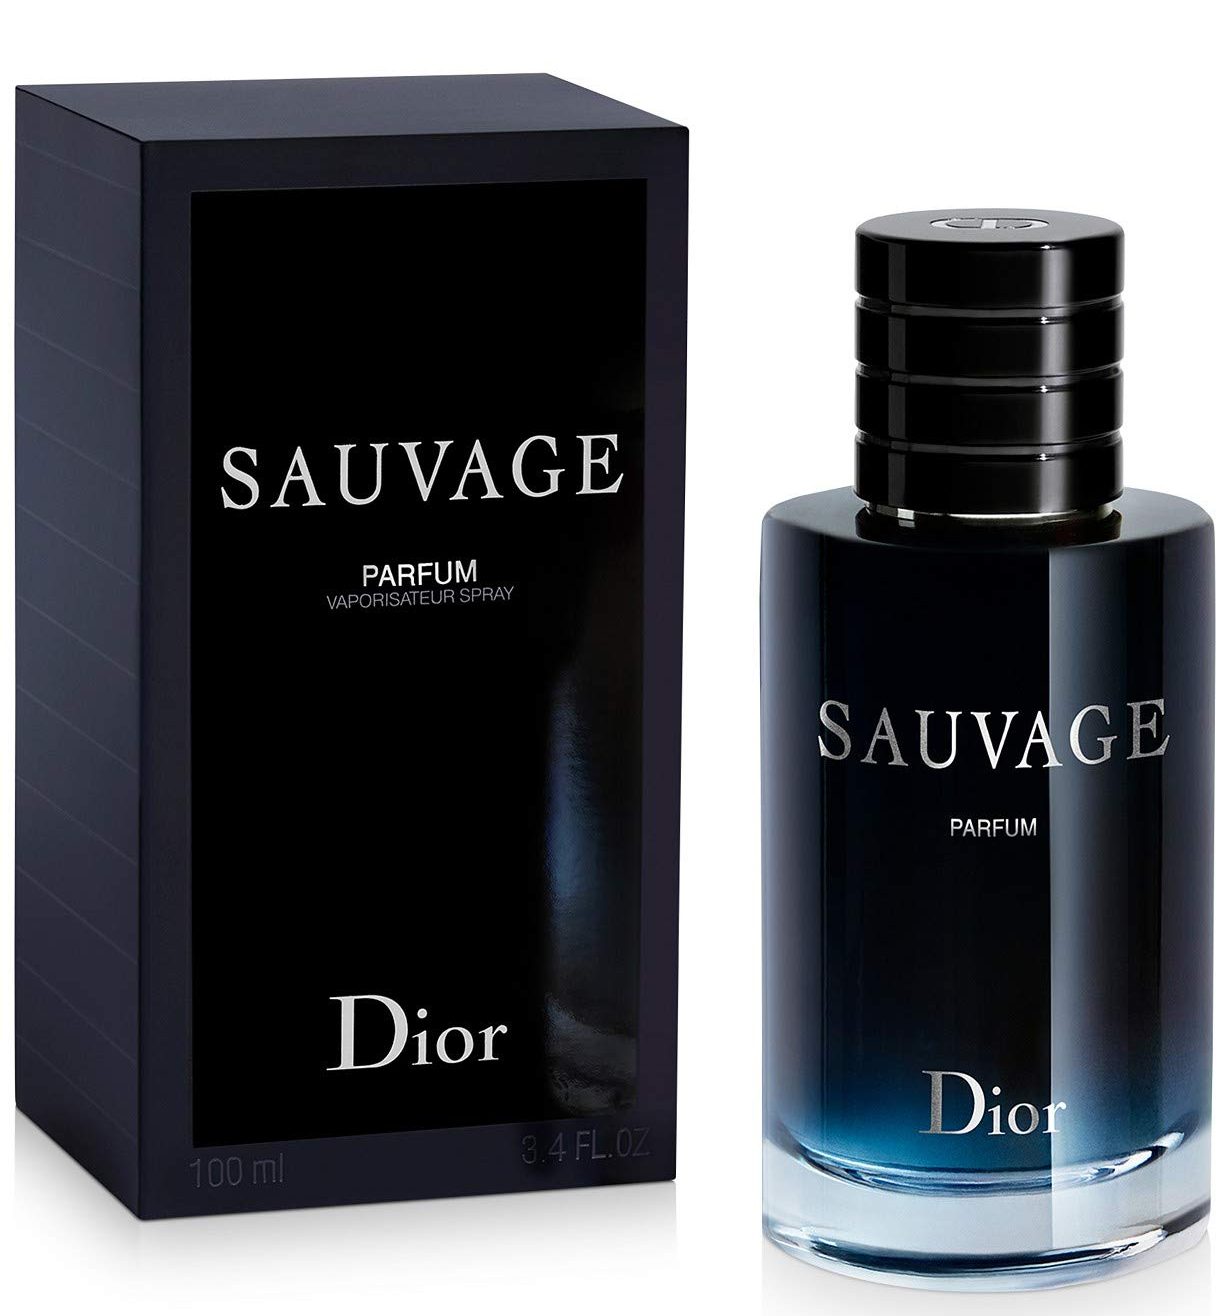 Nước hoa Dior Sauvage Parfum cho phái mạnh